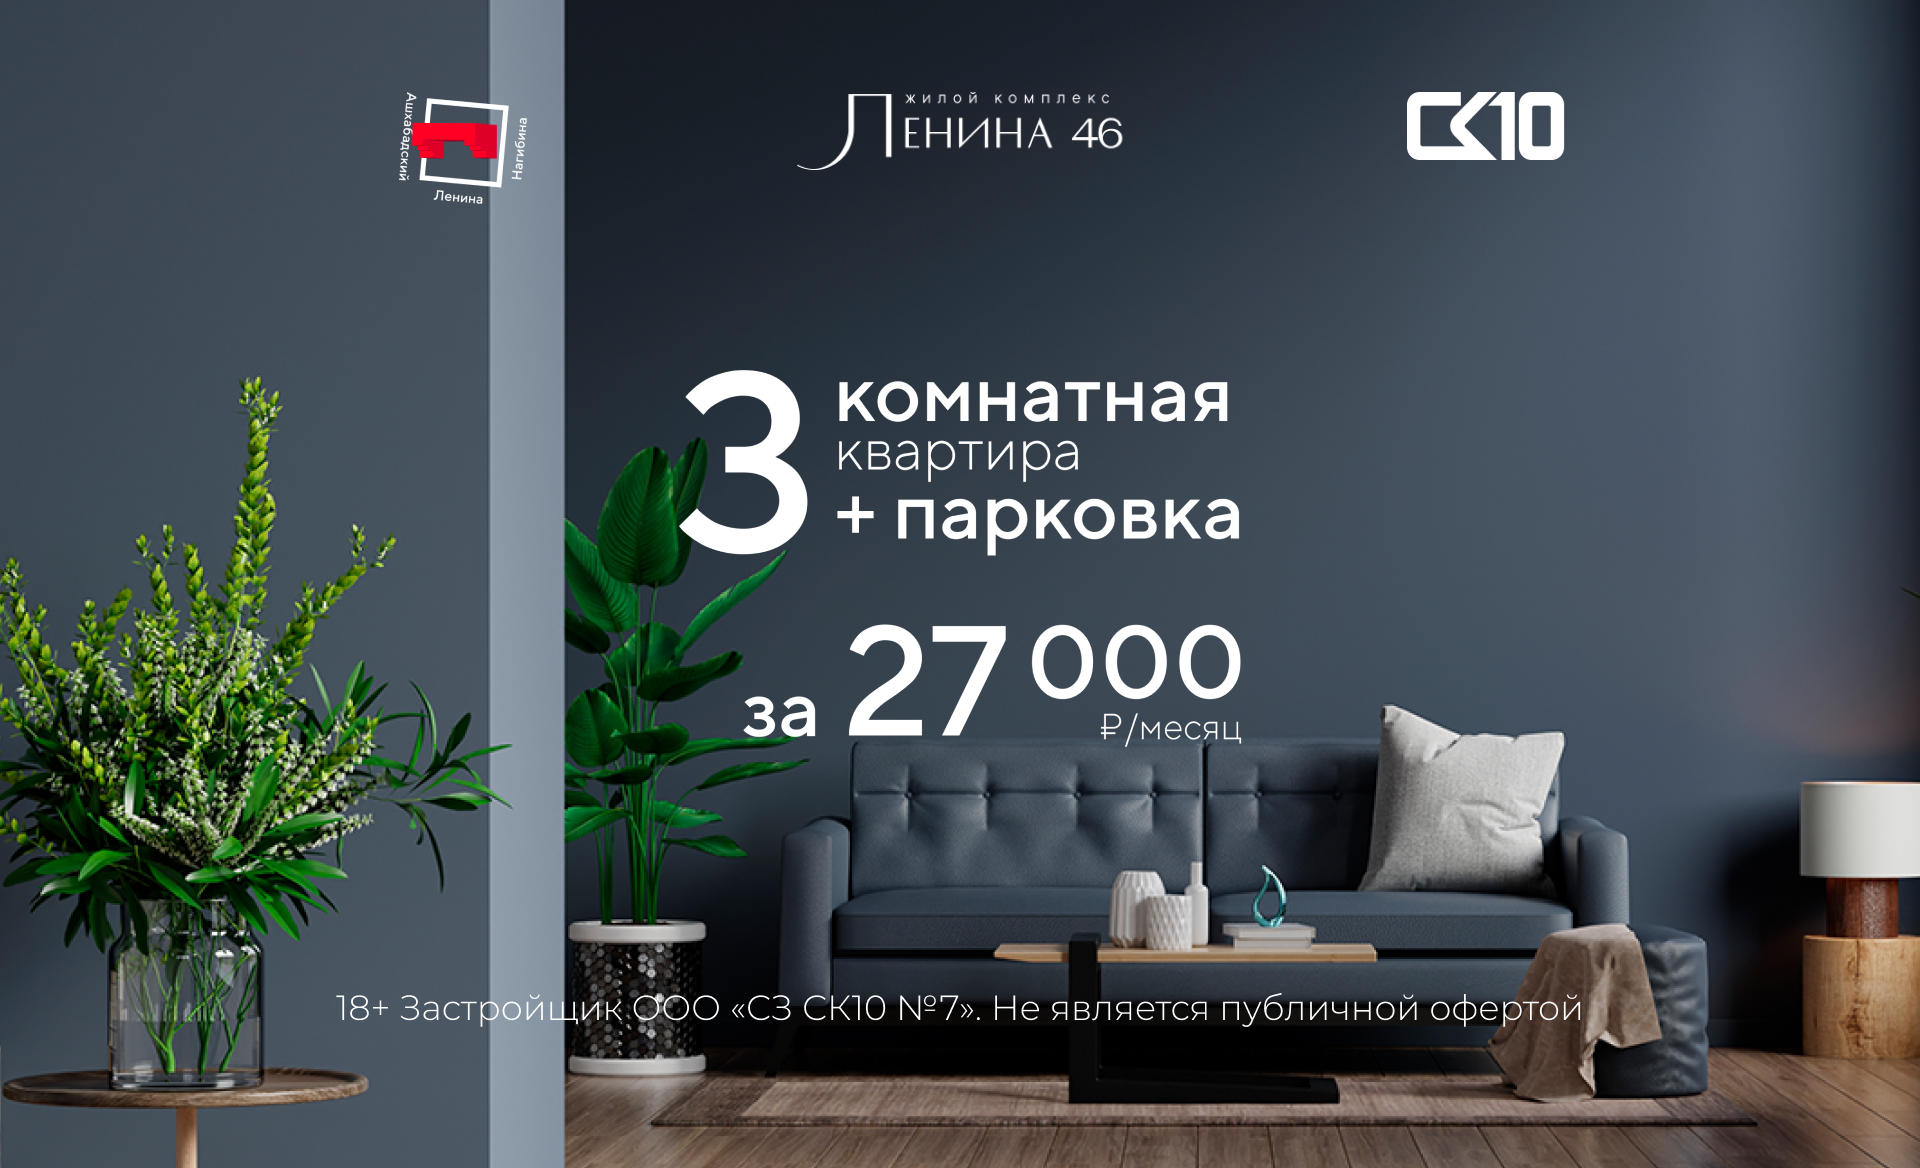 3-х комнатная квартира+парковка за 27 000 руб. в месяц!